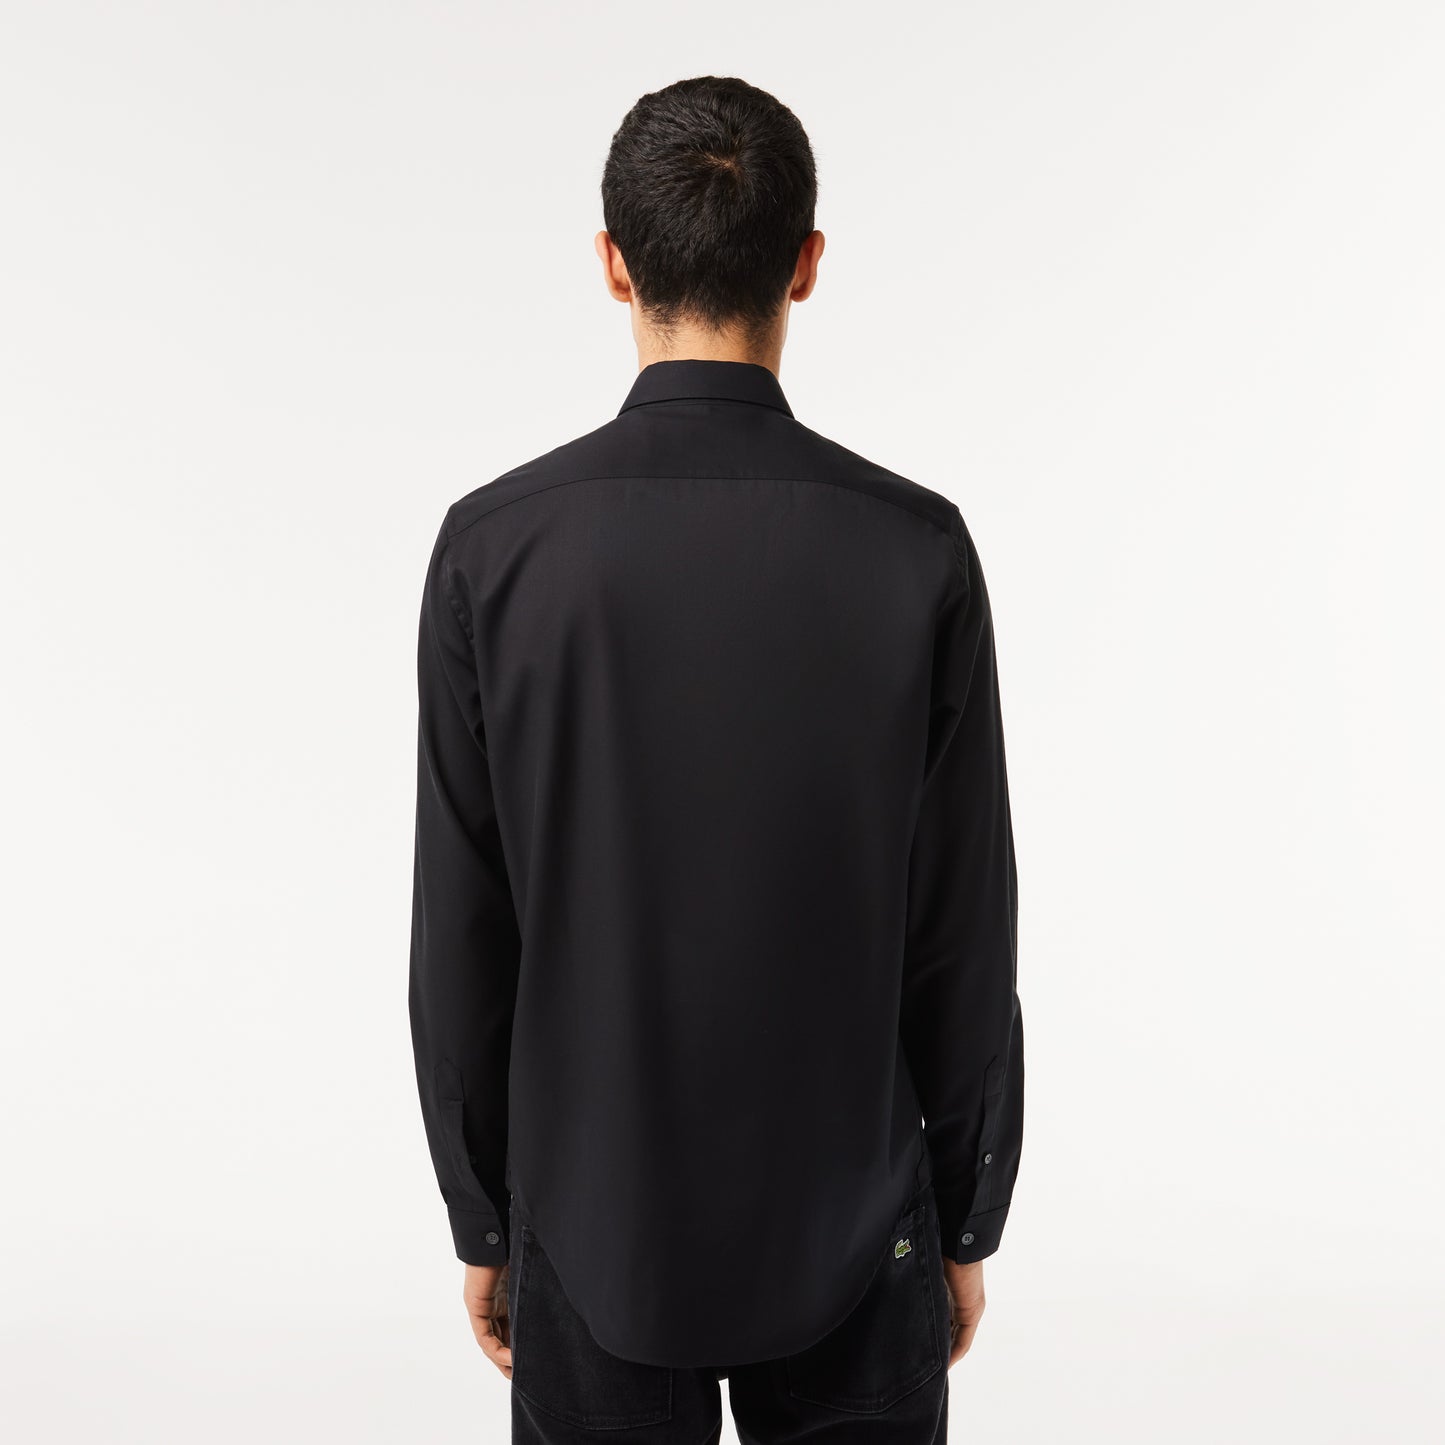 Men's Regular Fit Solid Cotton Shirt - CH8522